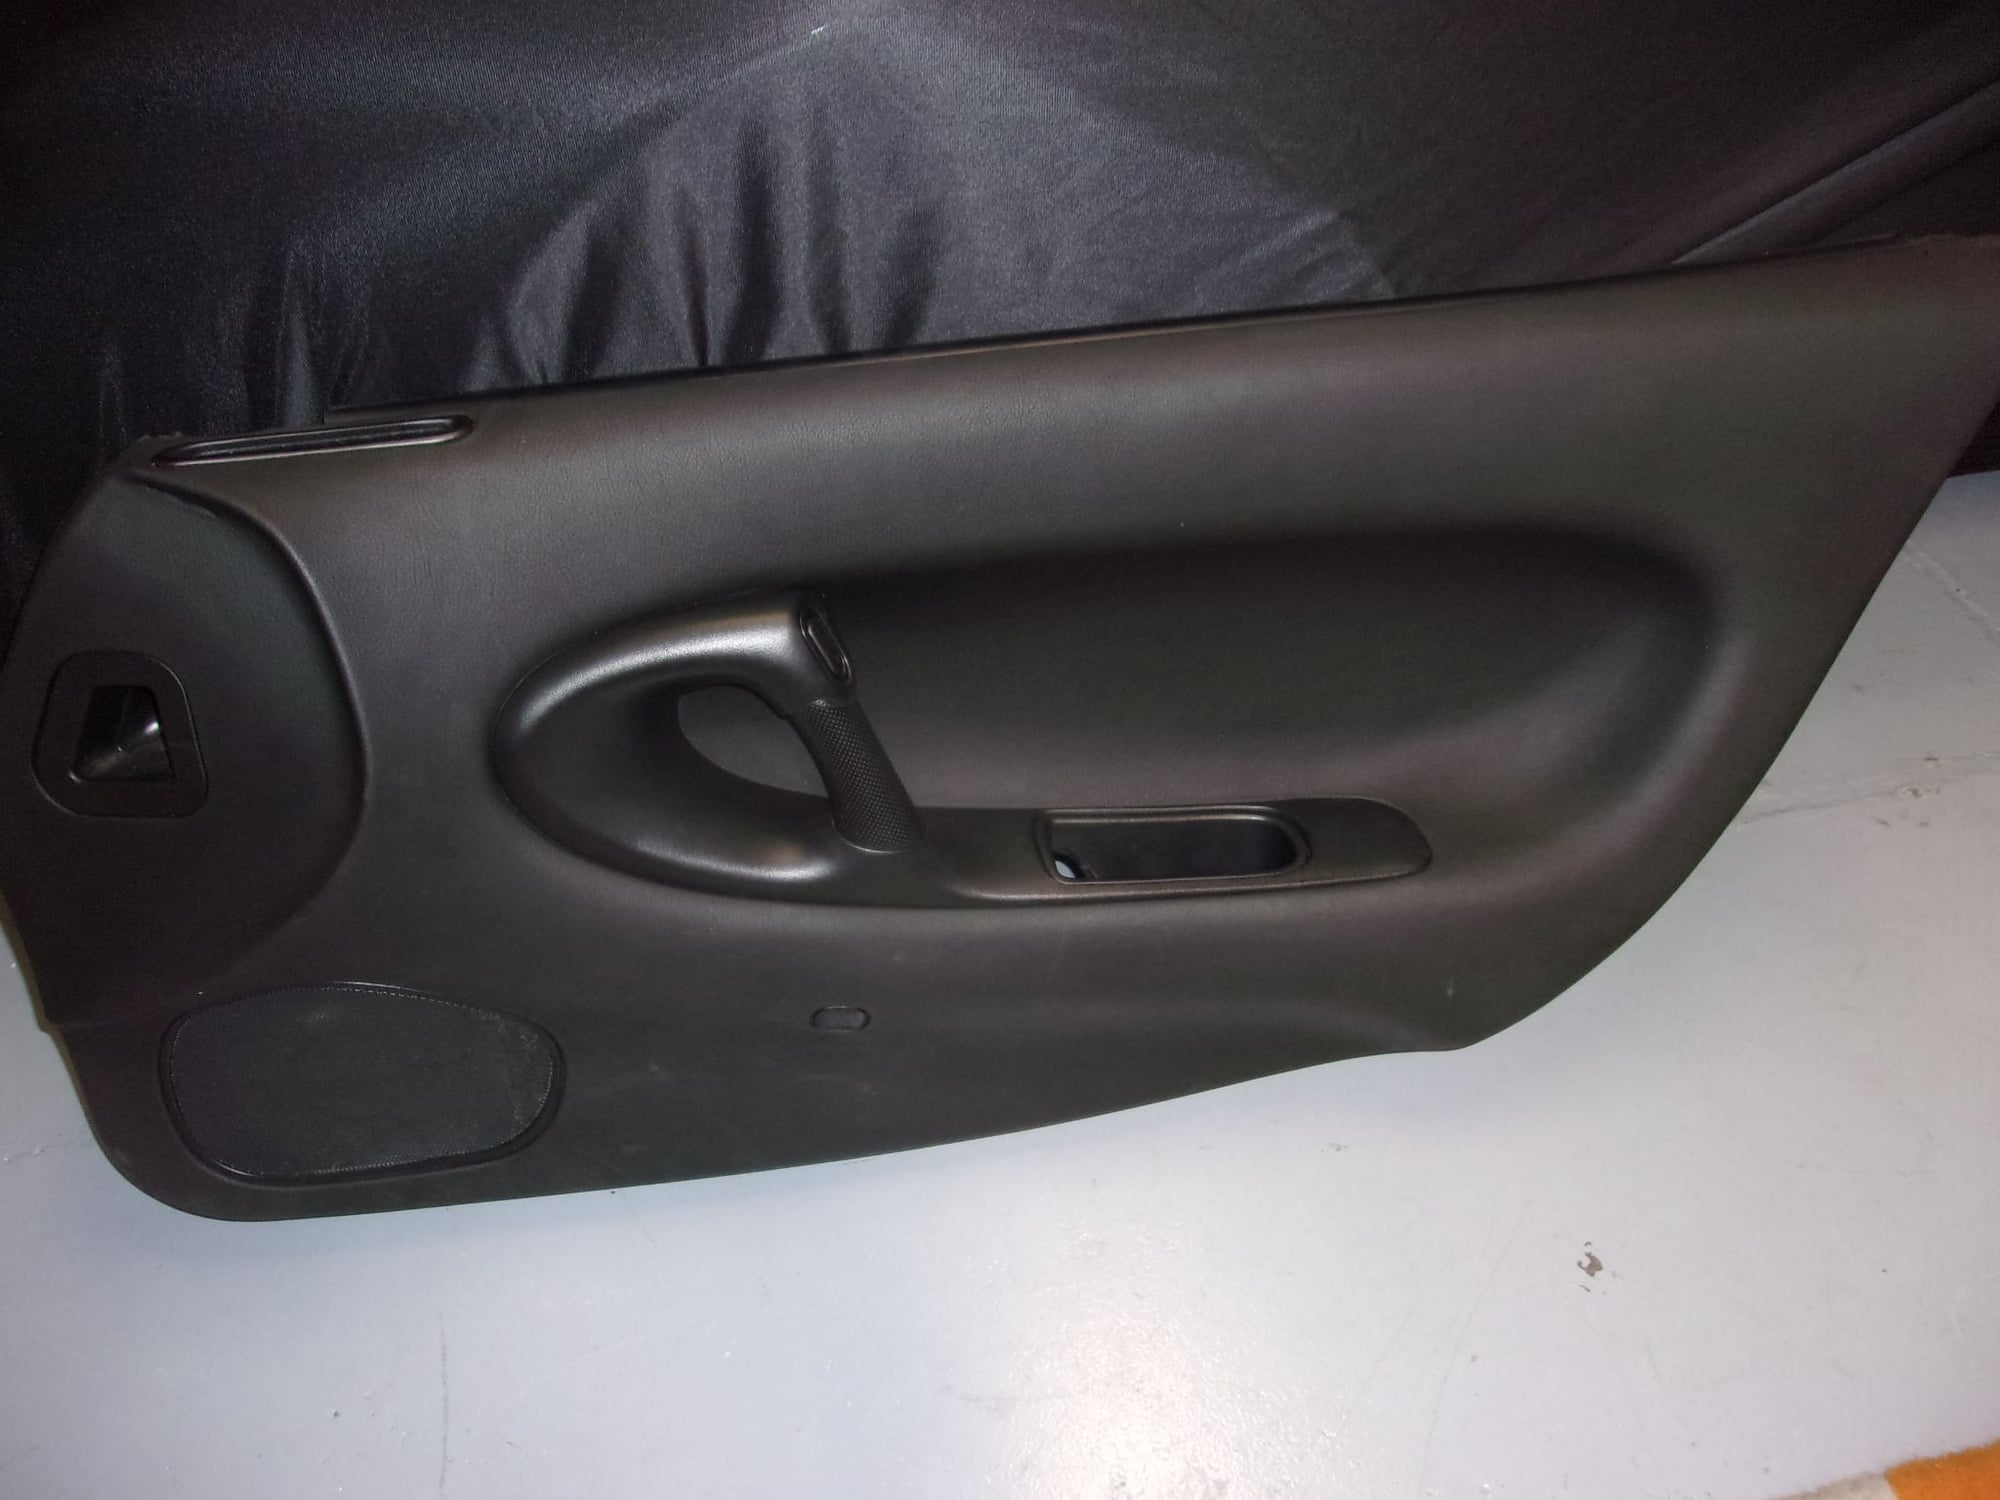 Interior/Upholstery - '95 Door Panels & Kicks - Used - 1994 to 1995 Mazda RX-7 - Murfreesboro, TN 37130, United States